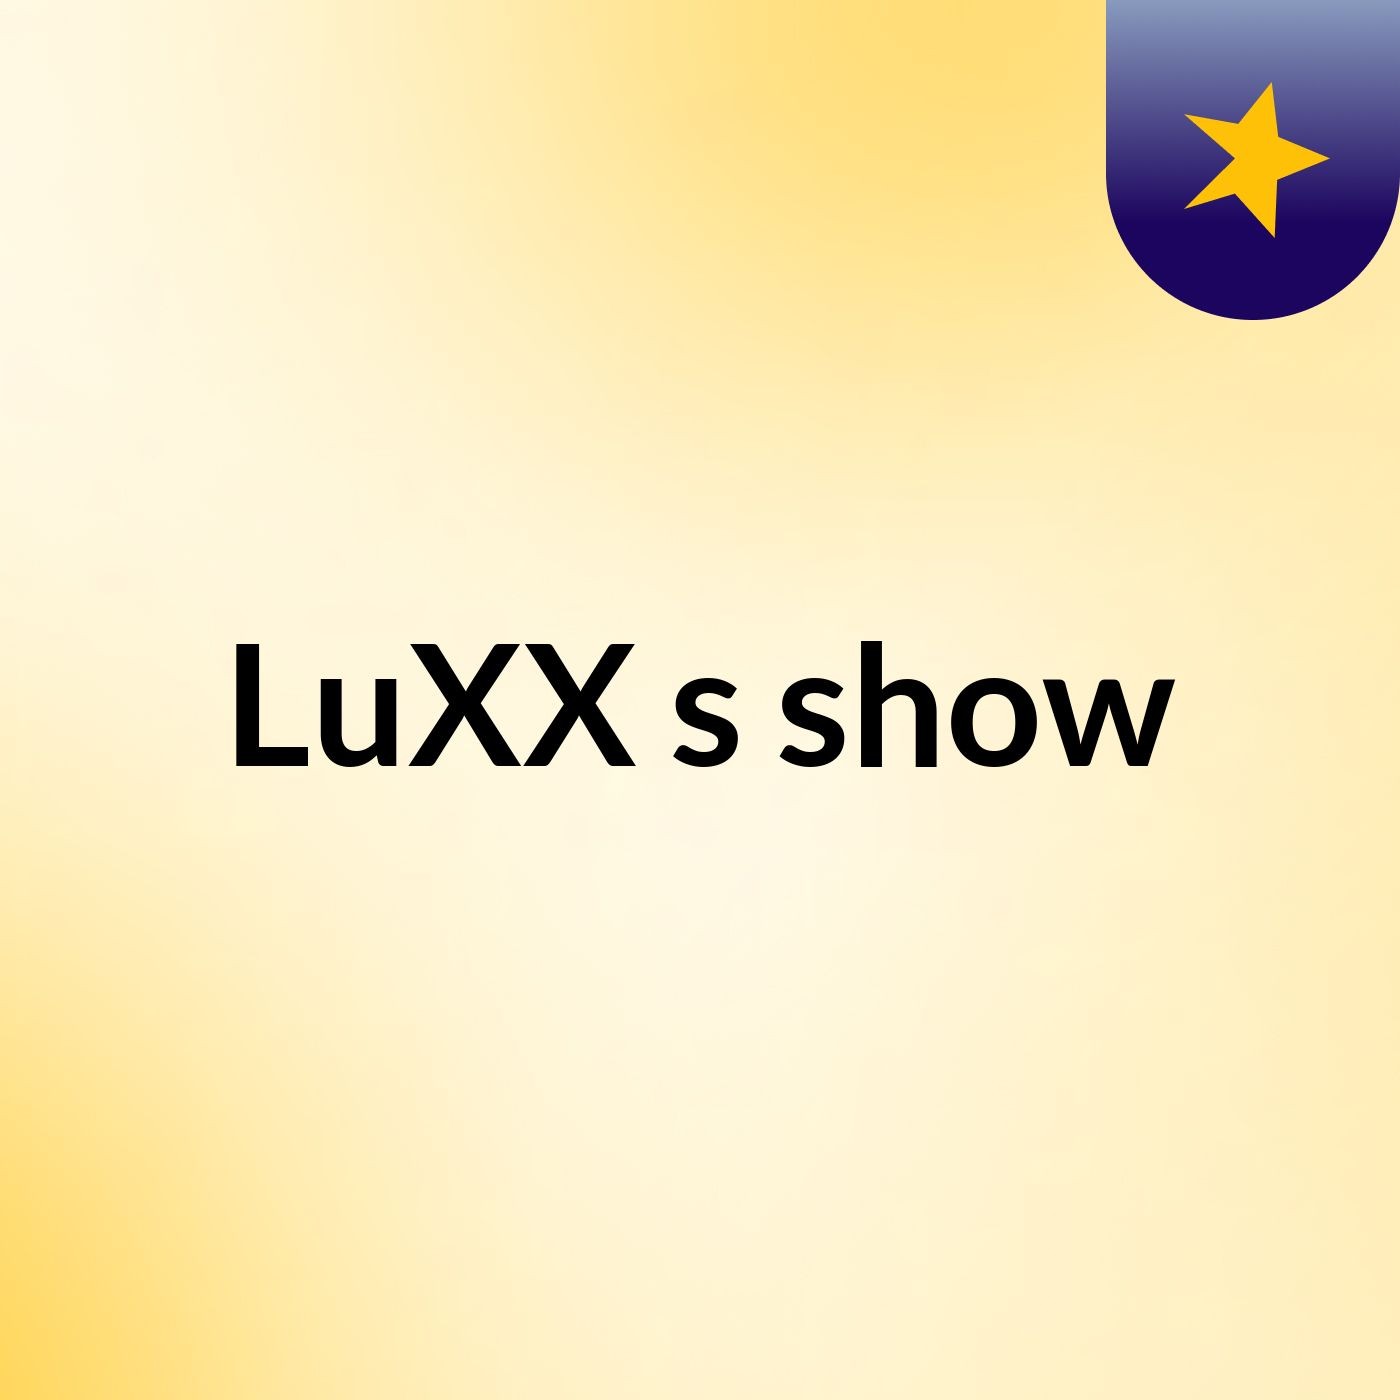 LuXX's show